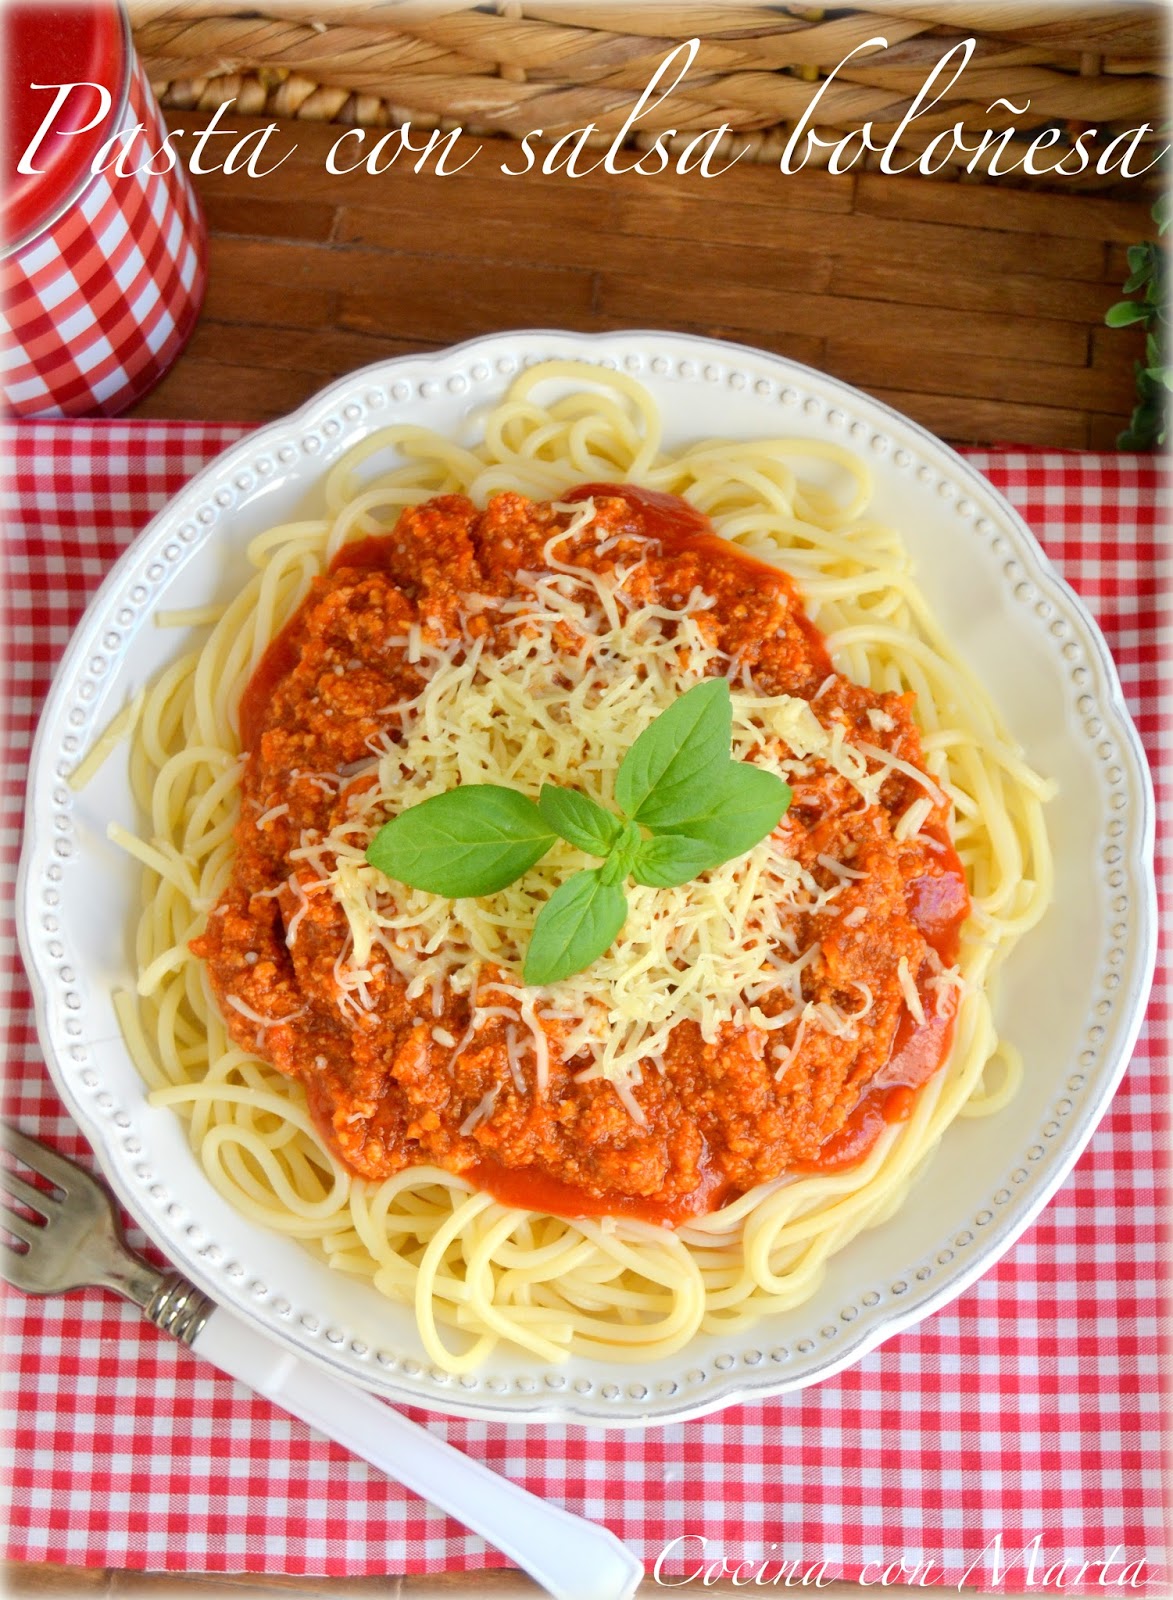 Pasta, macarrones, espaguetis con salsa boloñesa casera. Receta fácil, con y sin Thermomix.